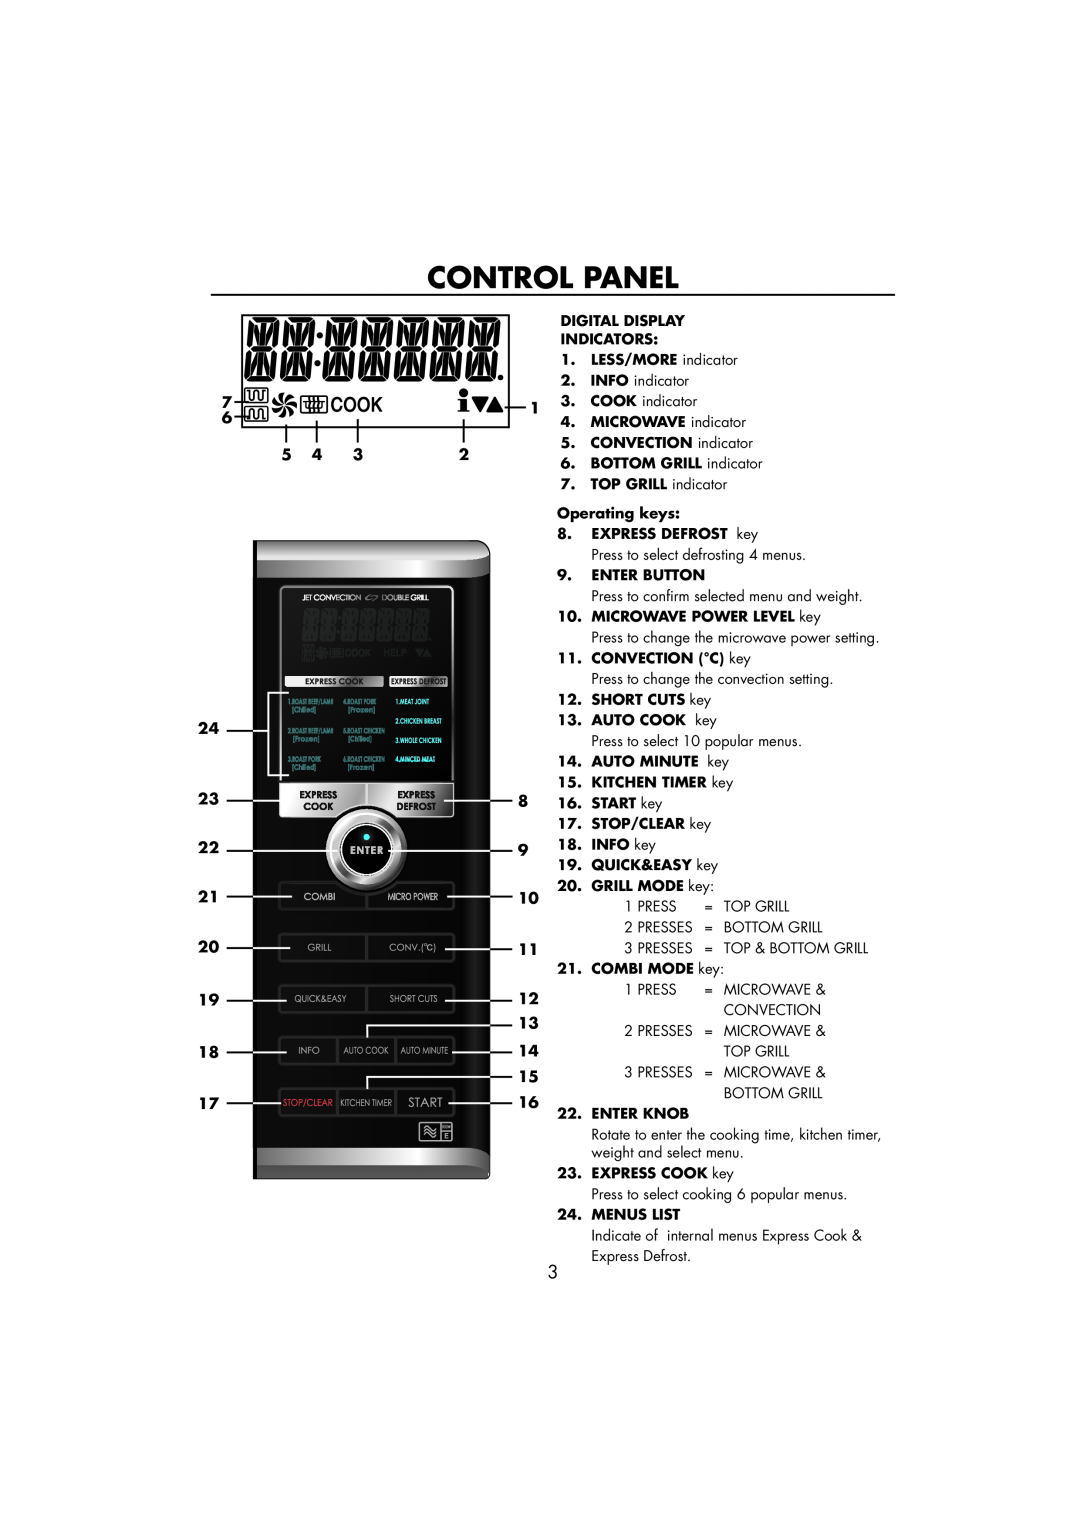 Sharp R-890SLM Control Panel, DIGITAL DISPLAY INDICATORS 1. LESS/MORE indicator, Operating keys 8. EXPRESS DEFROST key 